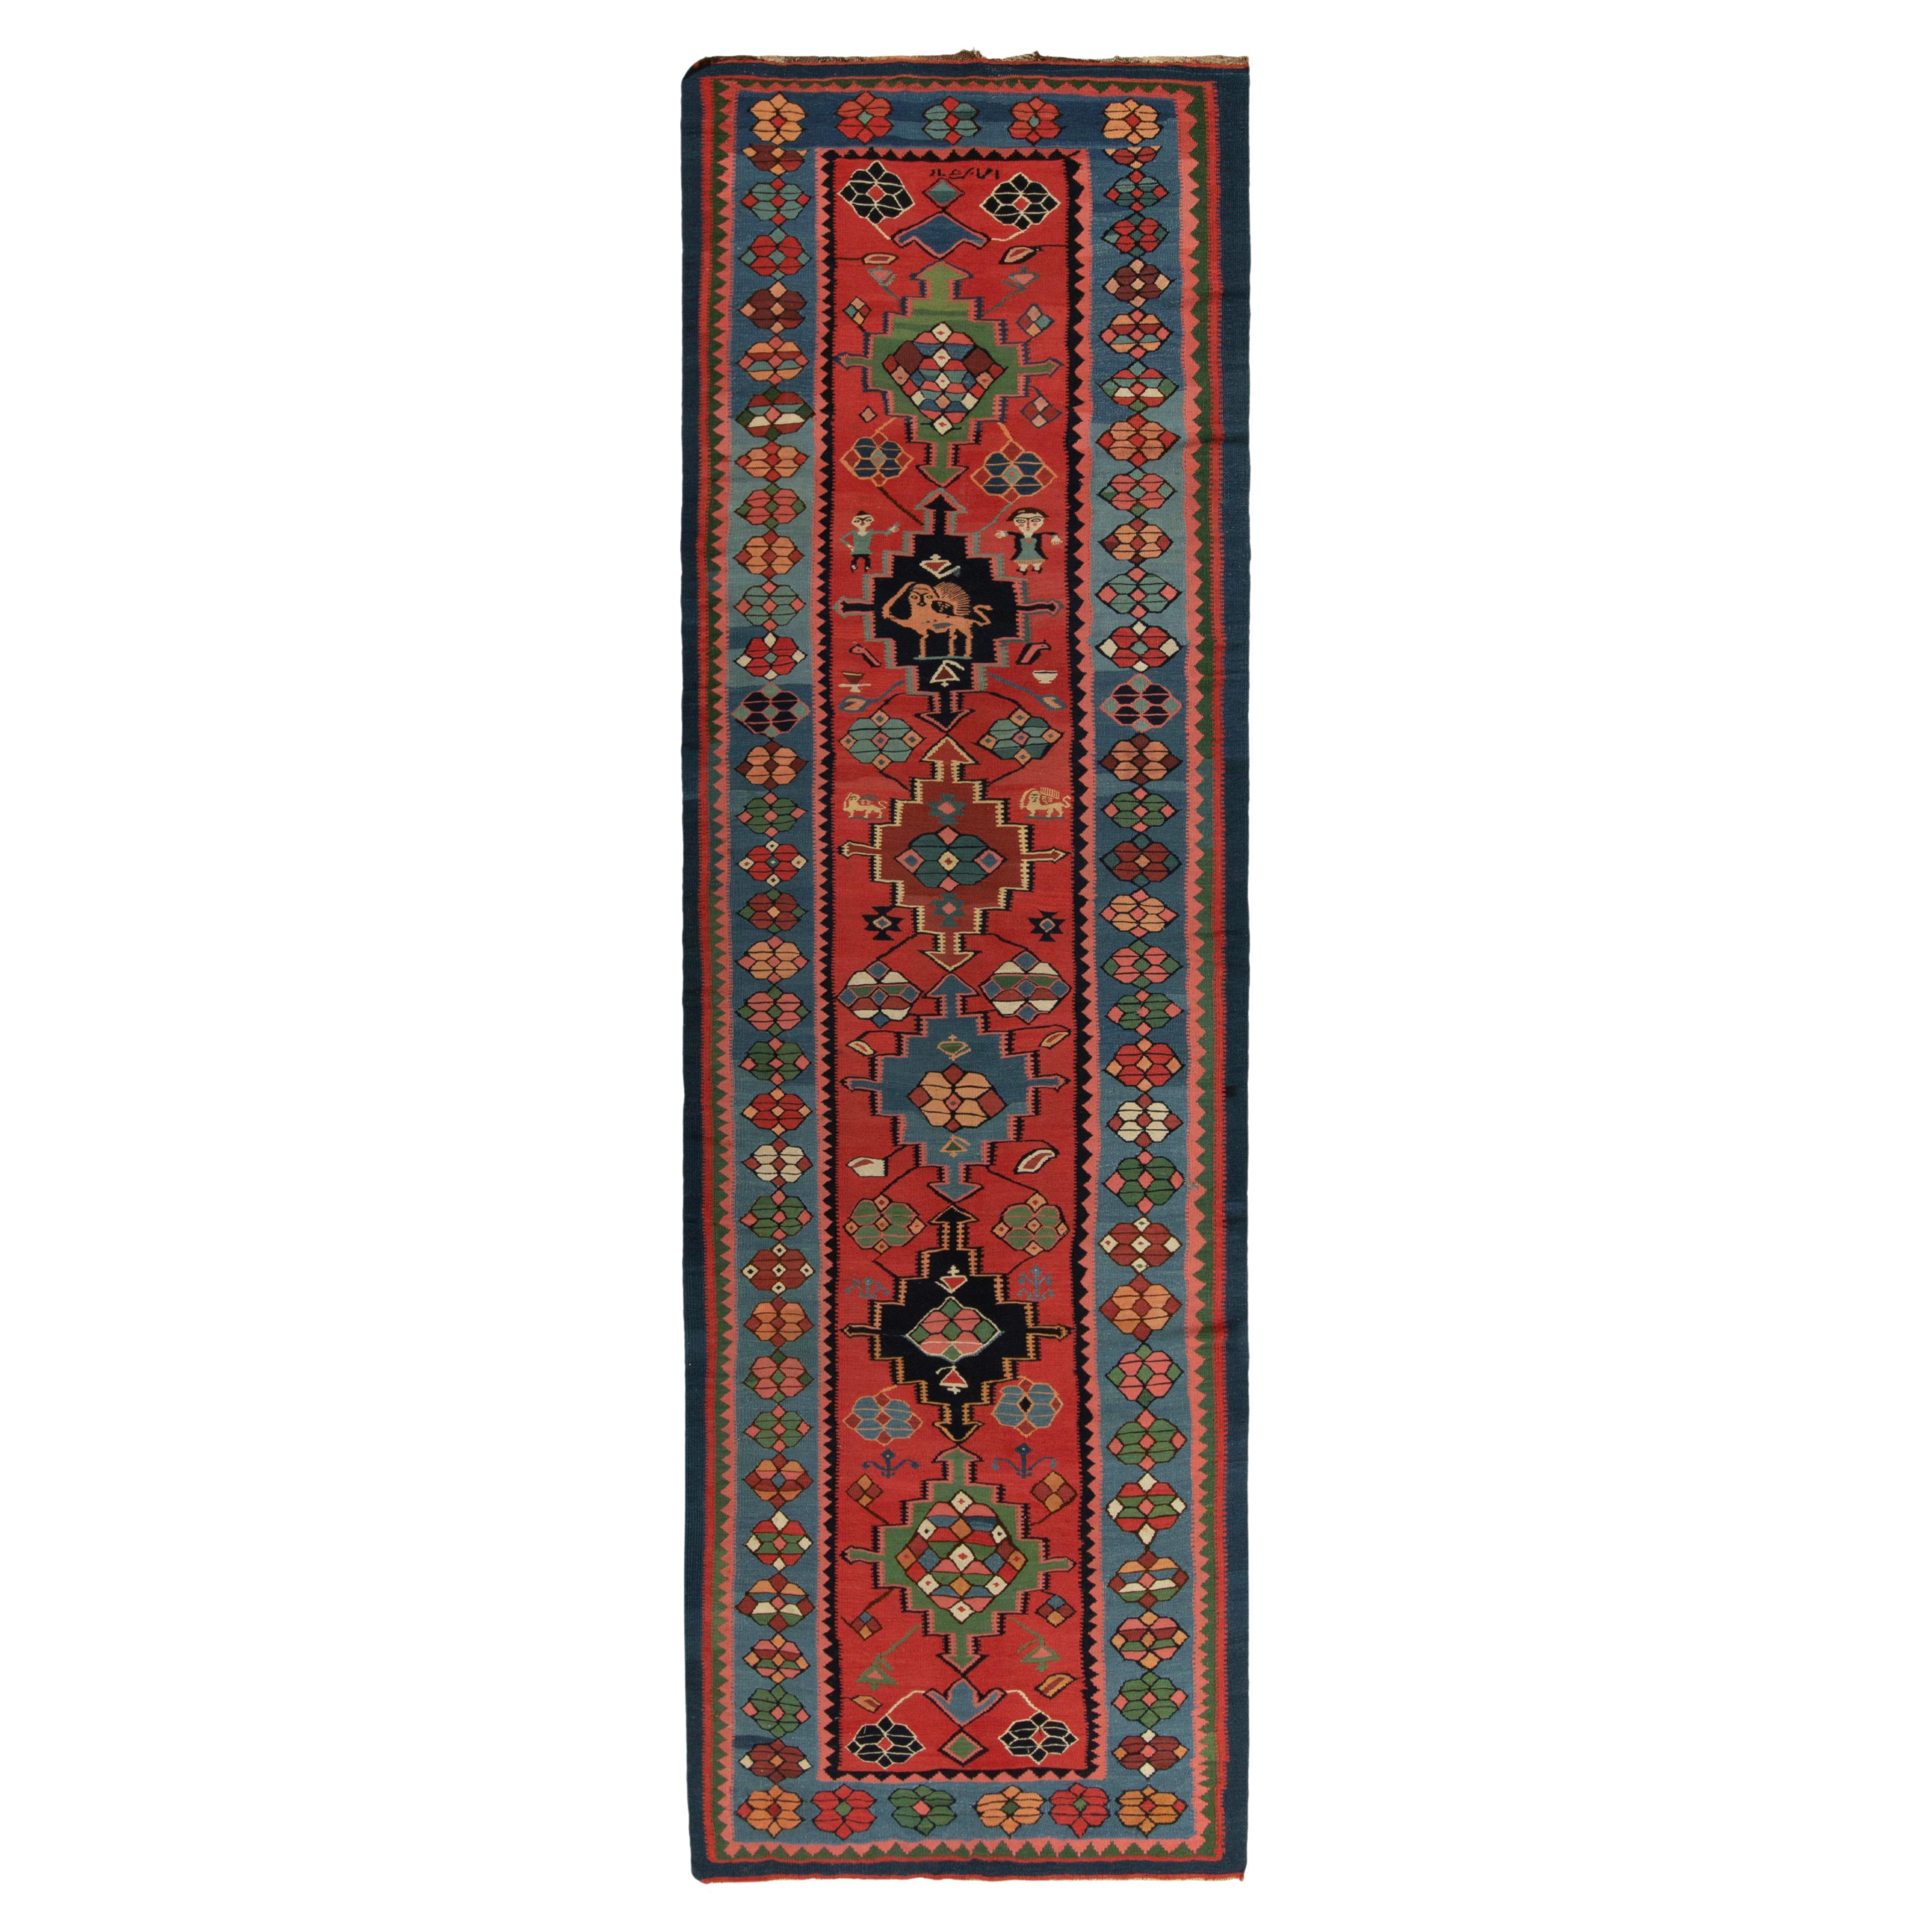 Antique Bidjar Kilim Rug in Red, Blue Tribal Geometric Pattern by Rug & Kilim For Sale